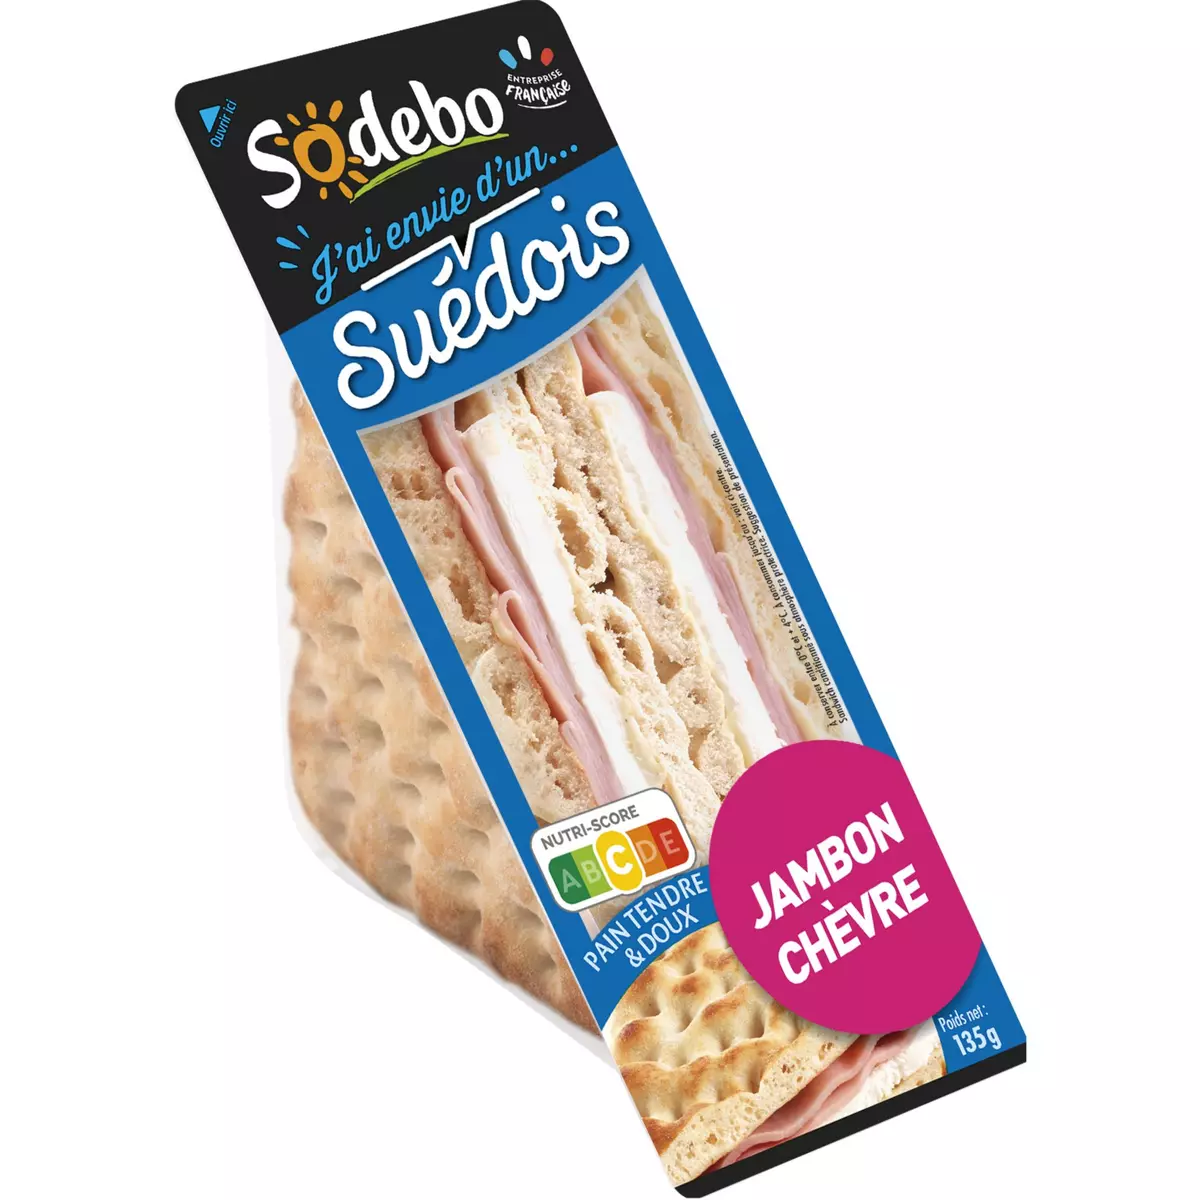 SODEBO Sandwich suédois jambon chèvre 1 portion 135g